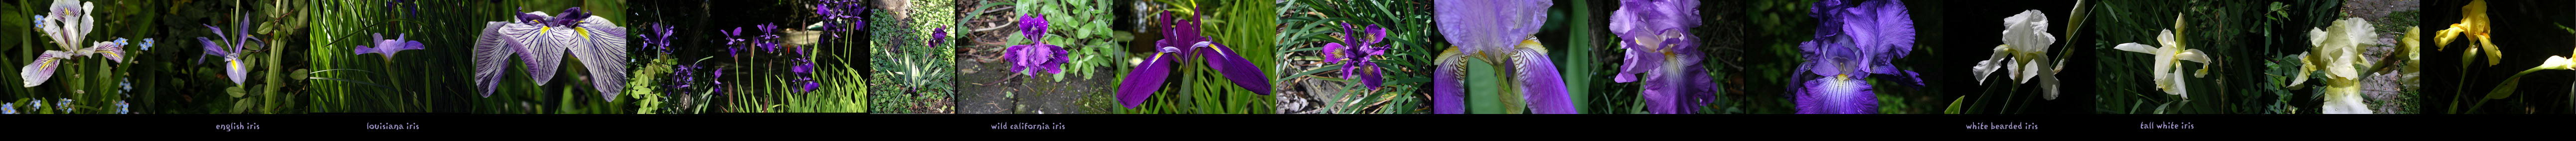 all the irises